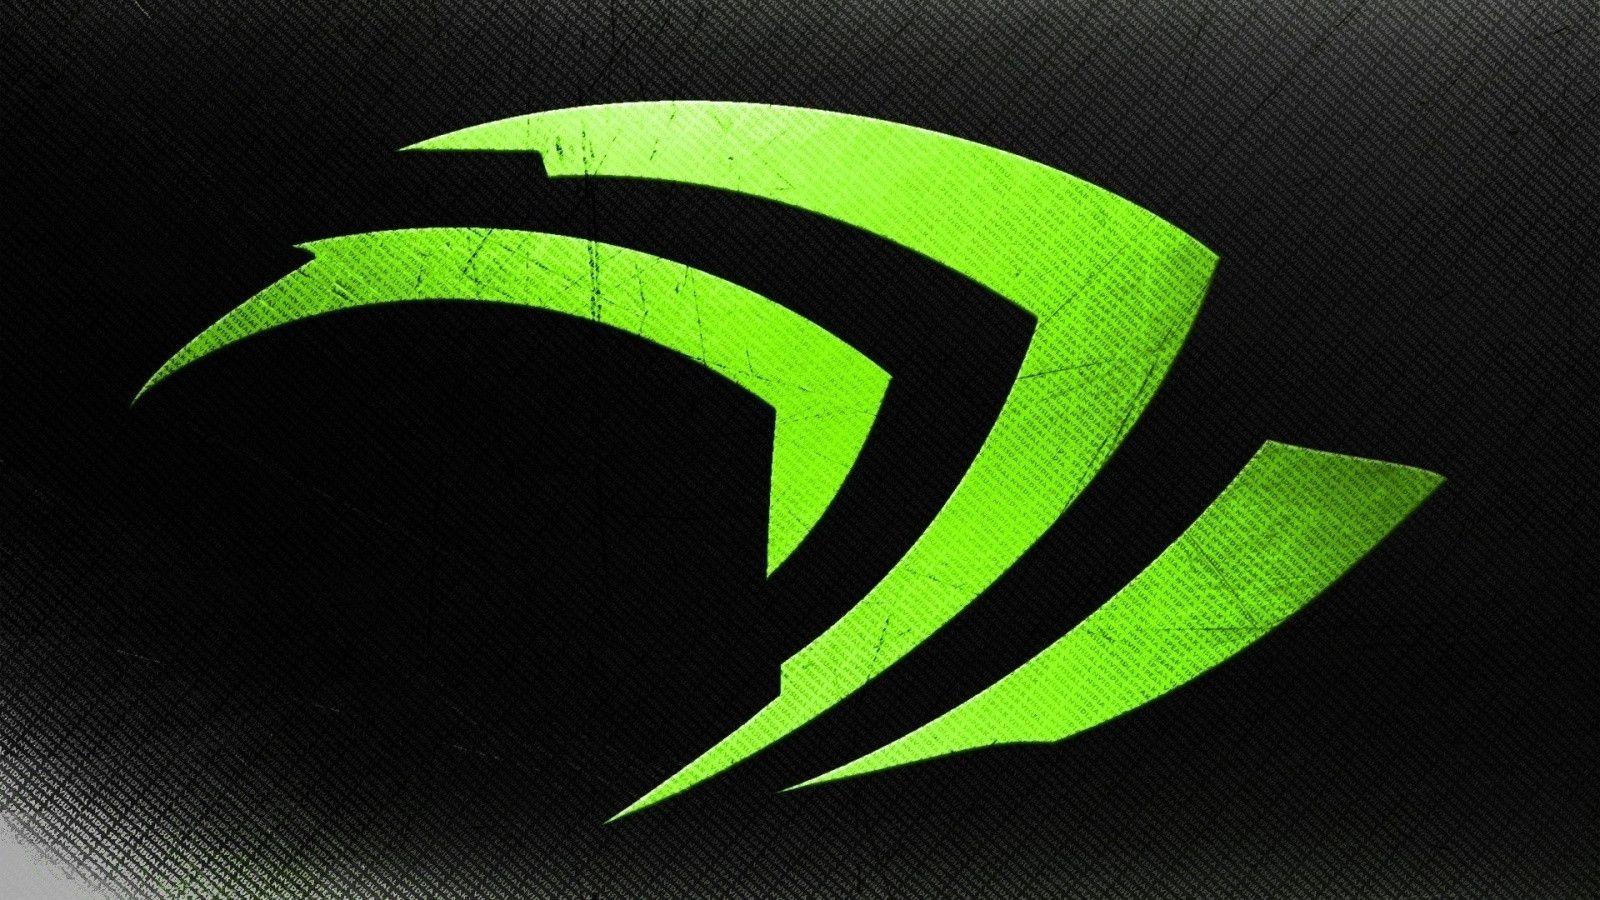 Des download cool HD nvidia logo brand green black background